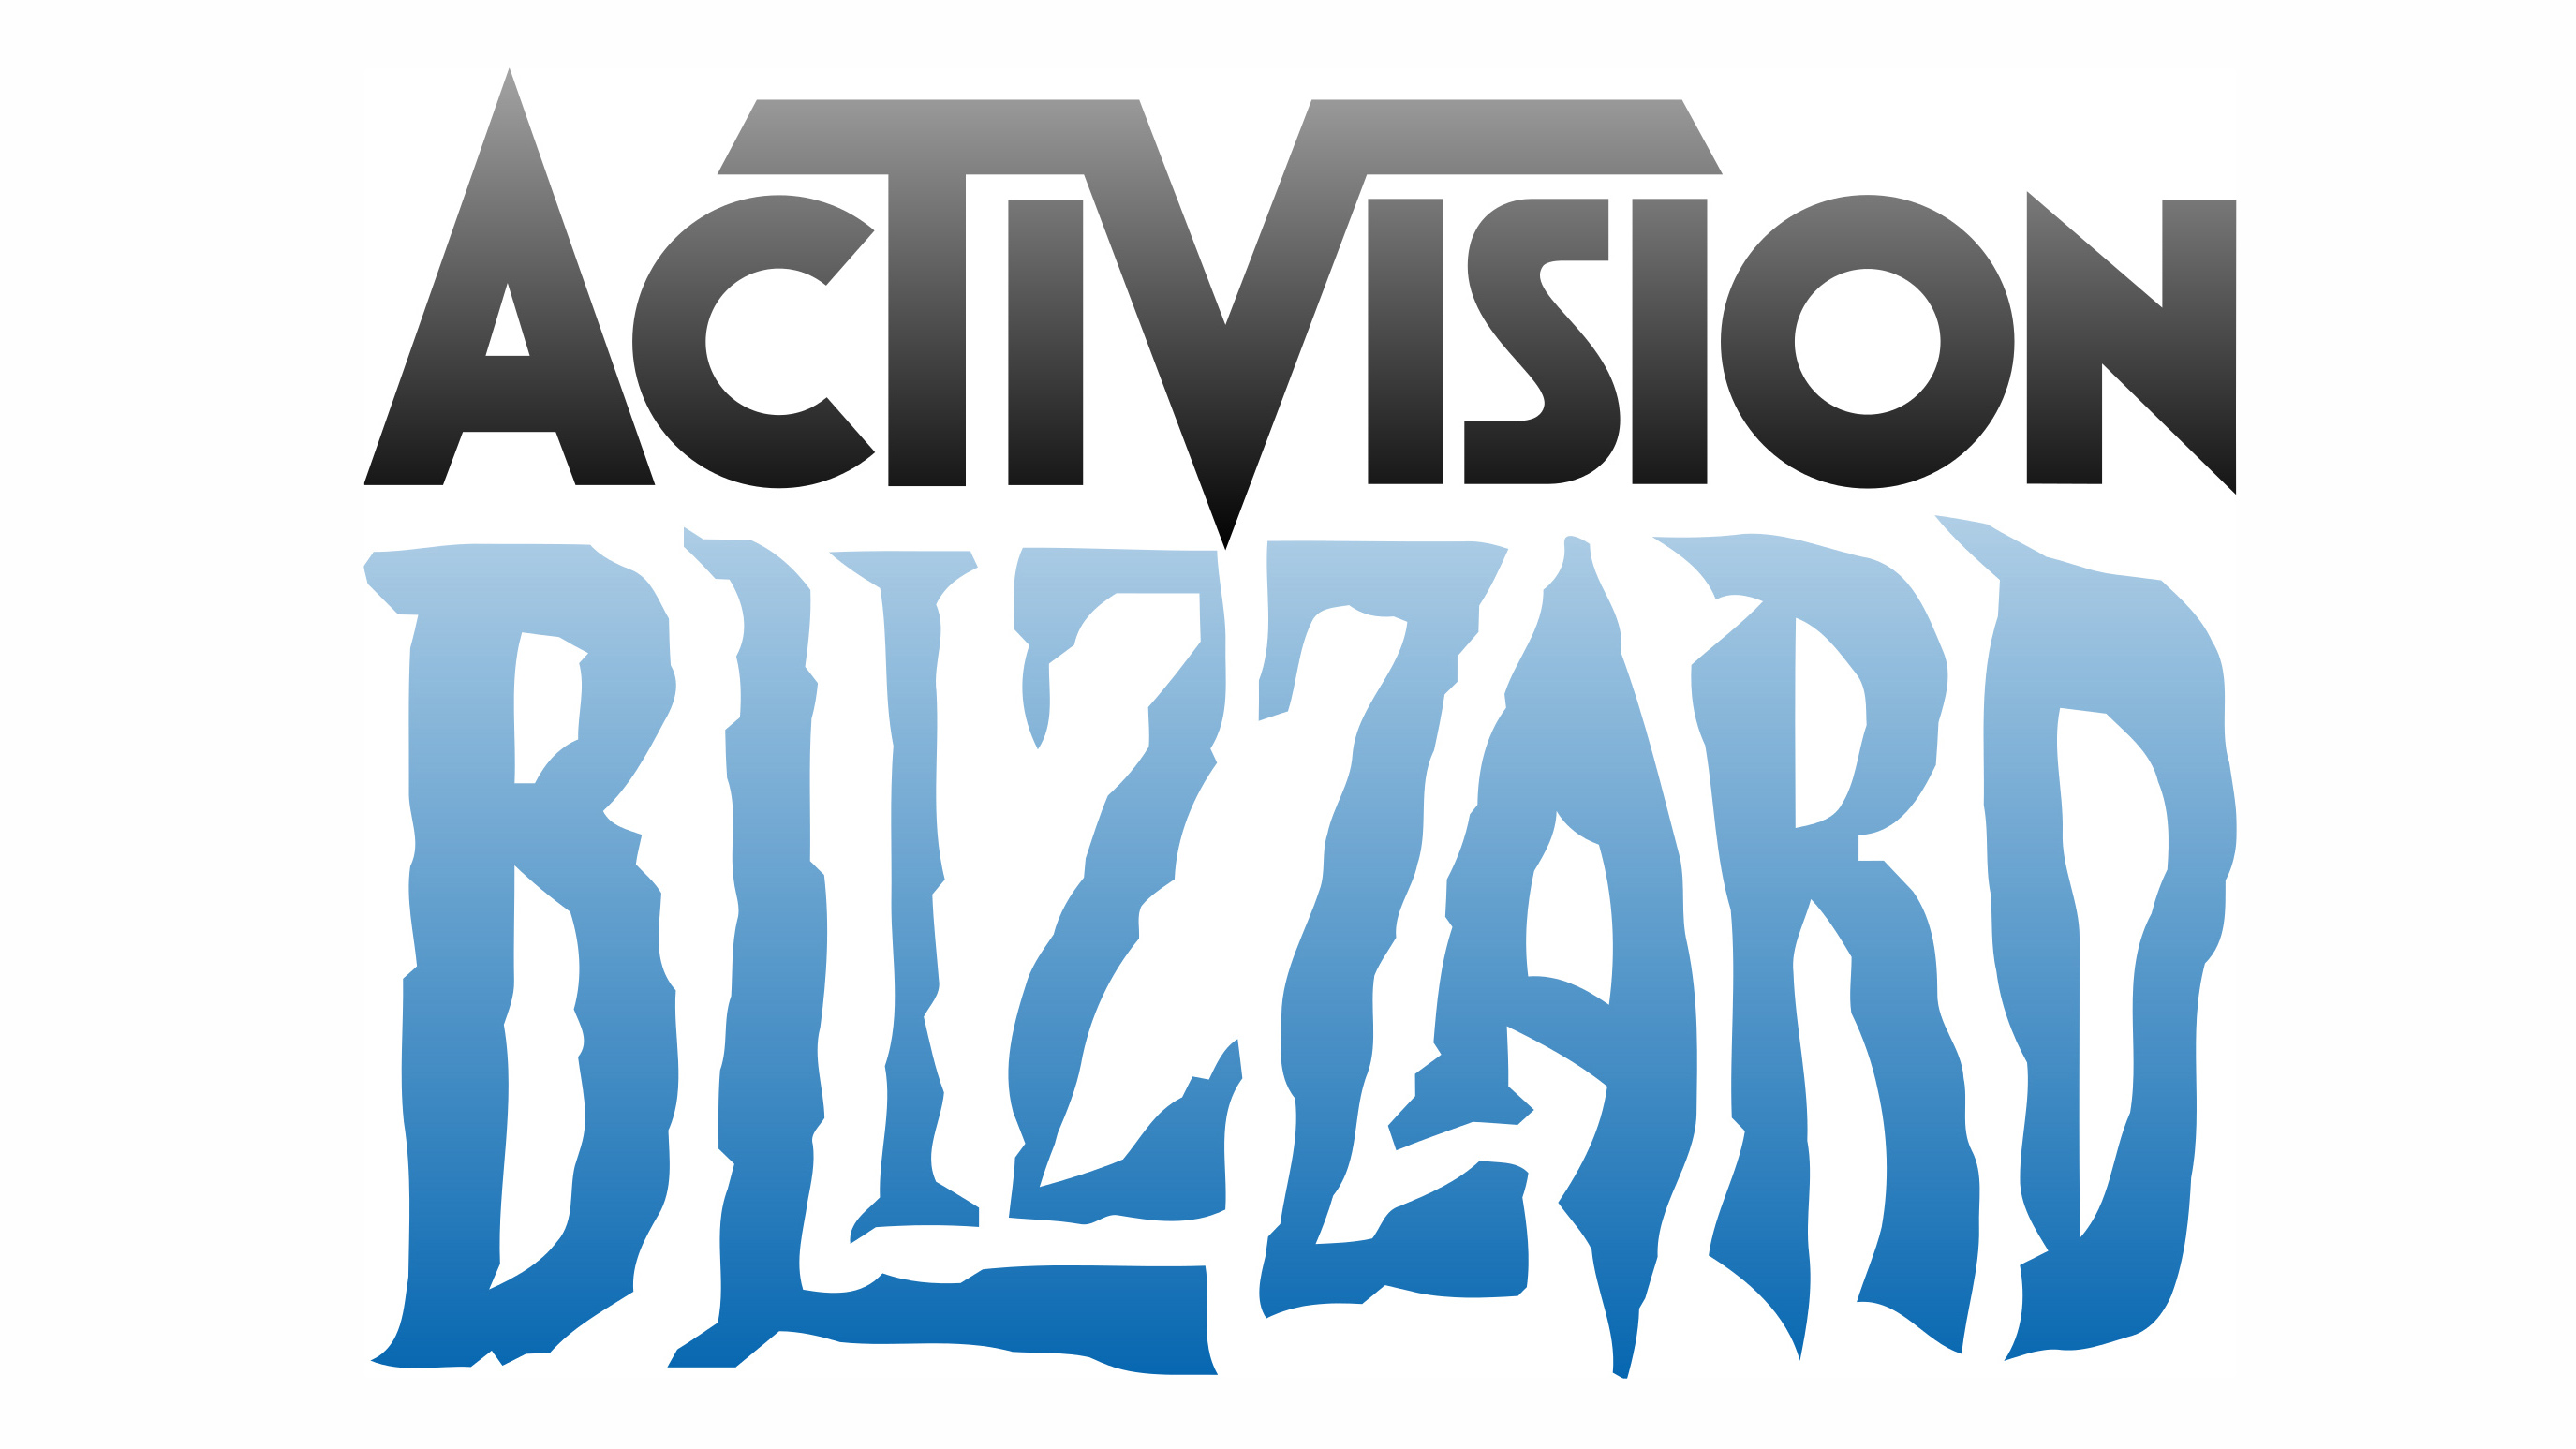 Activisoin Blizzard Logo